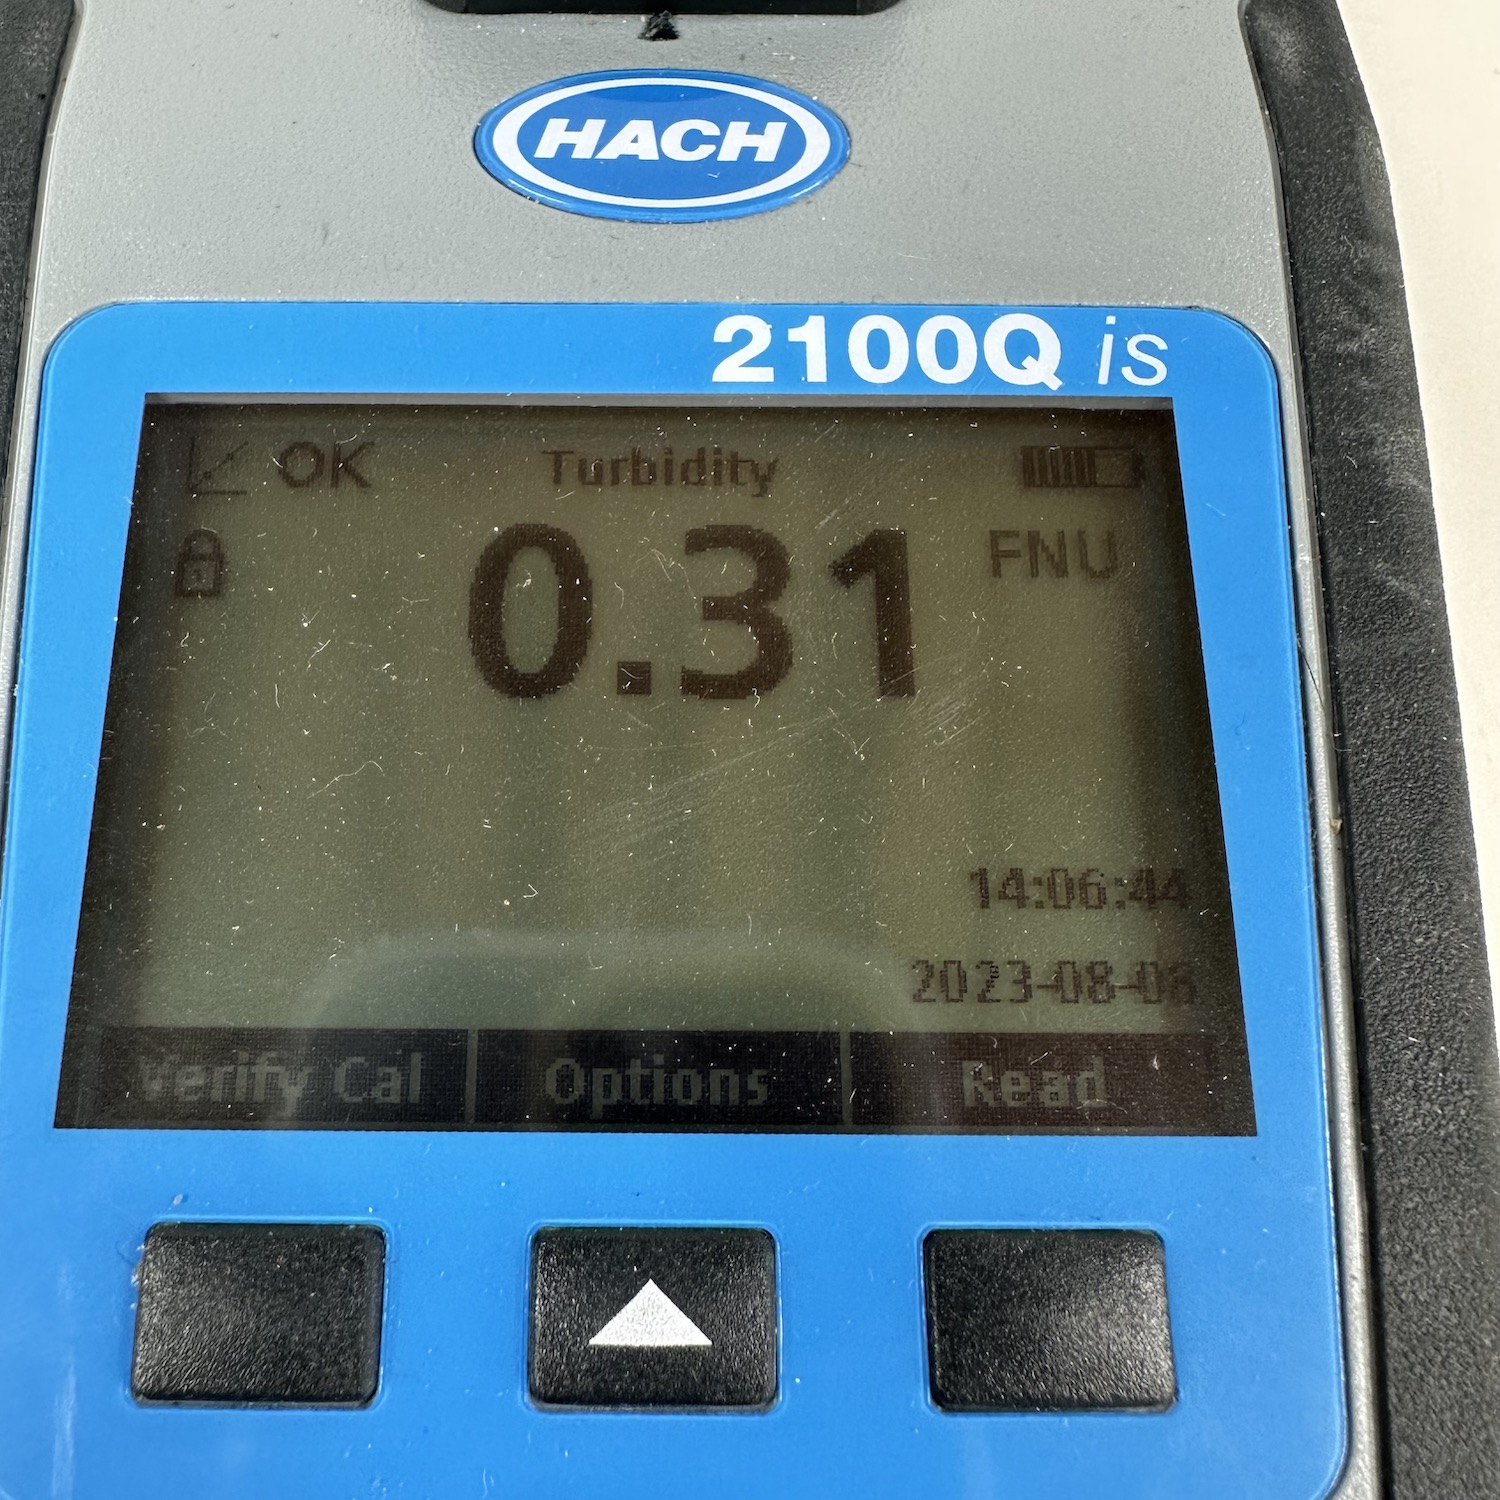 hach | 2100q | turbidimeter | turbidity analyser | lpg439.01.00012